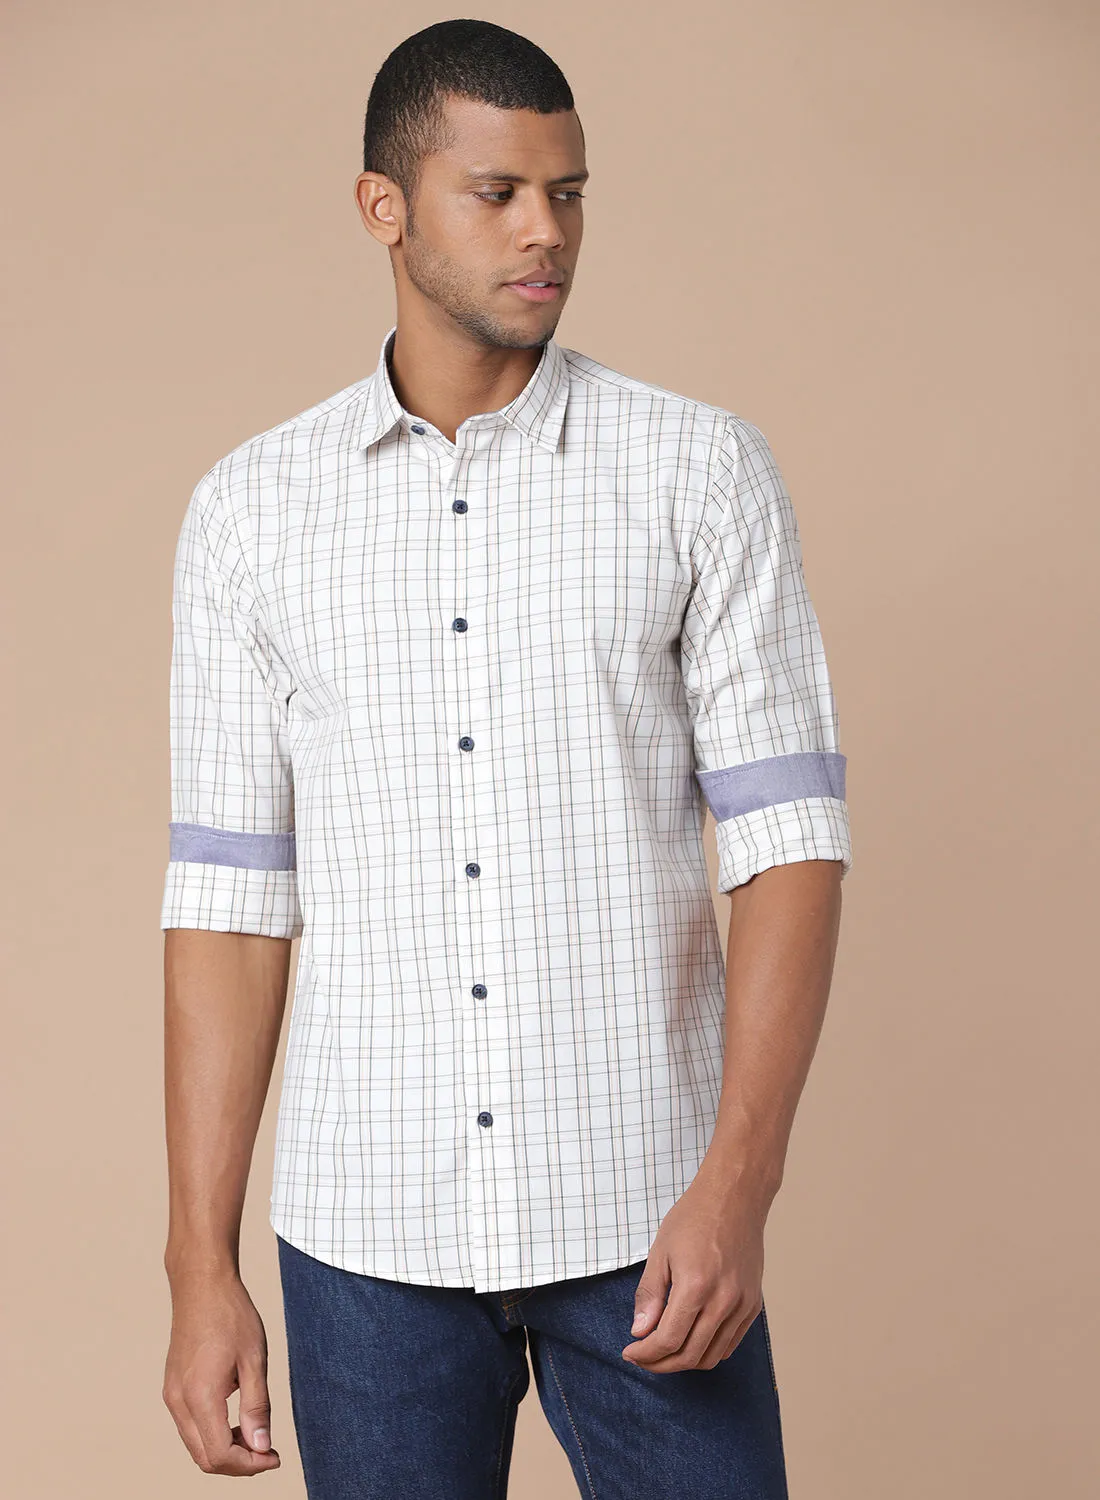 QUWA Casual Printed Collared Neck Shirt Checkered White